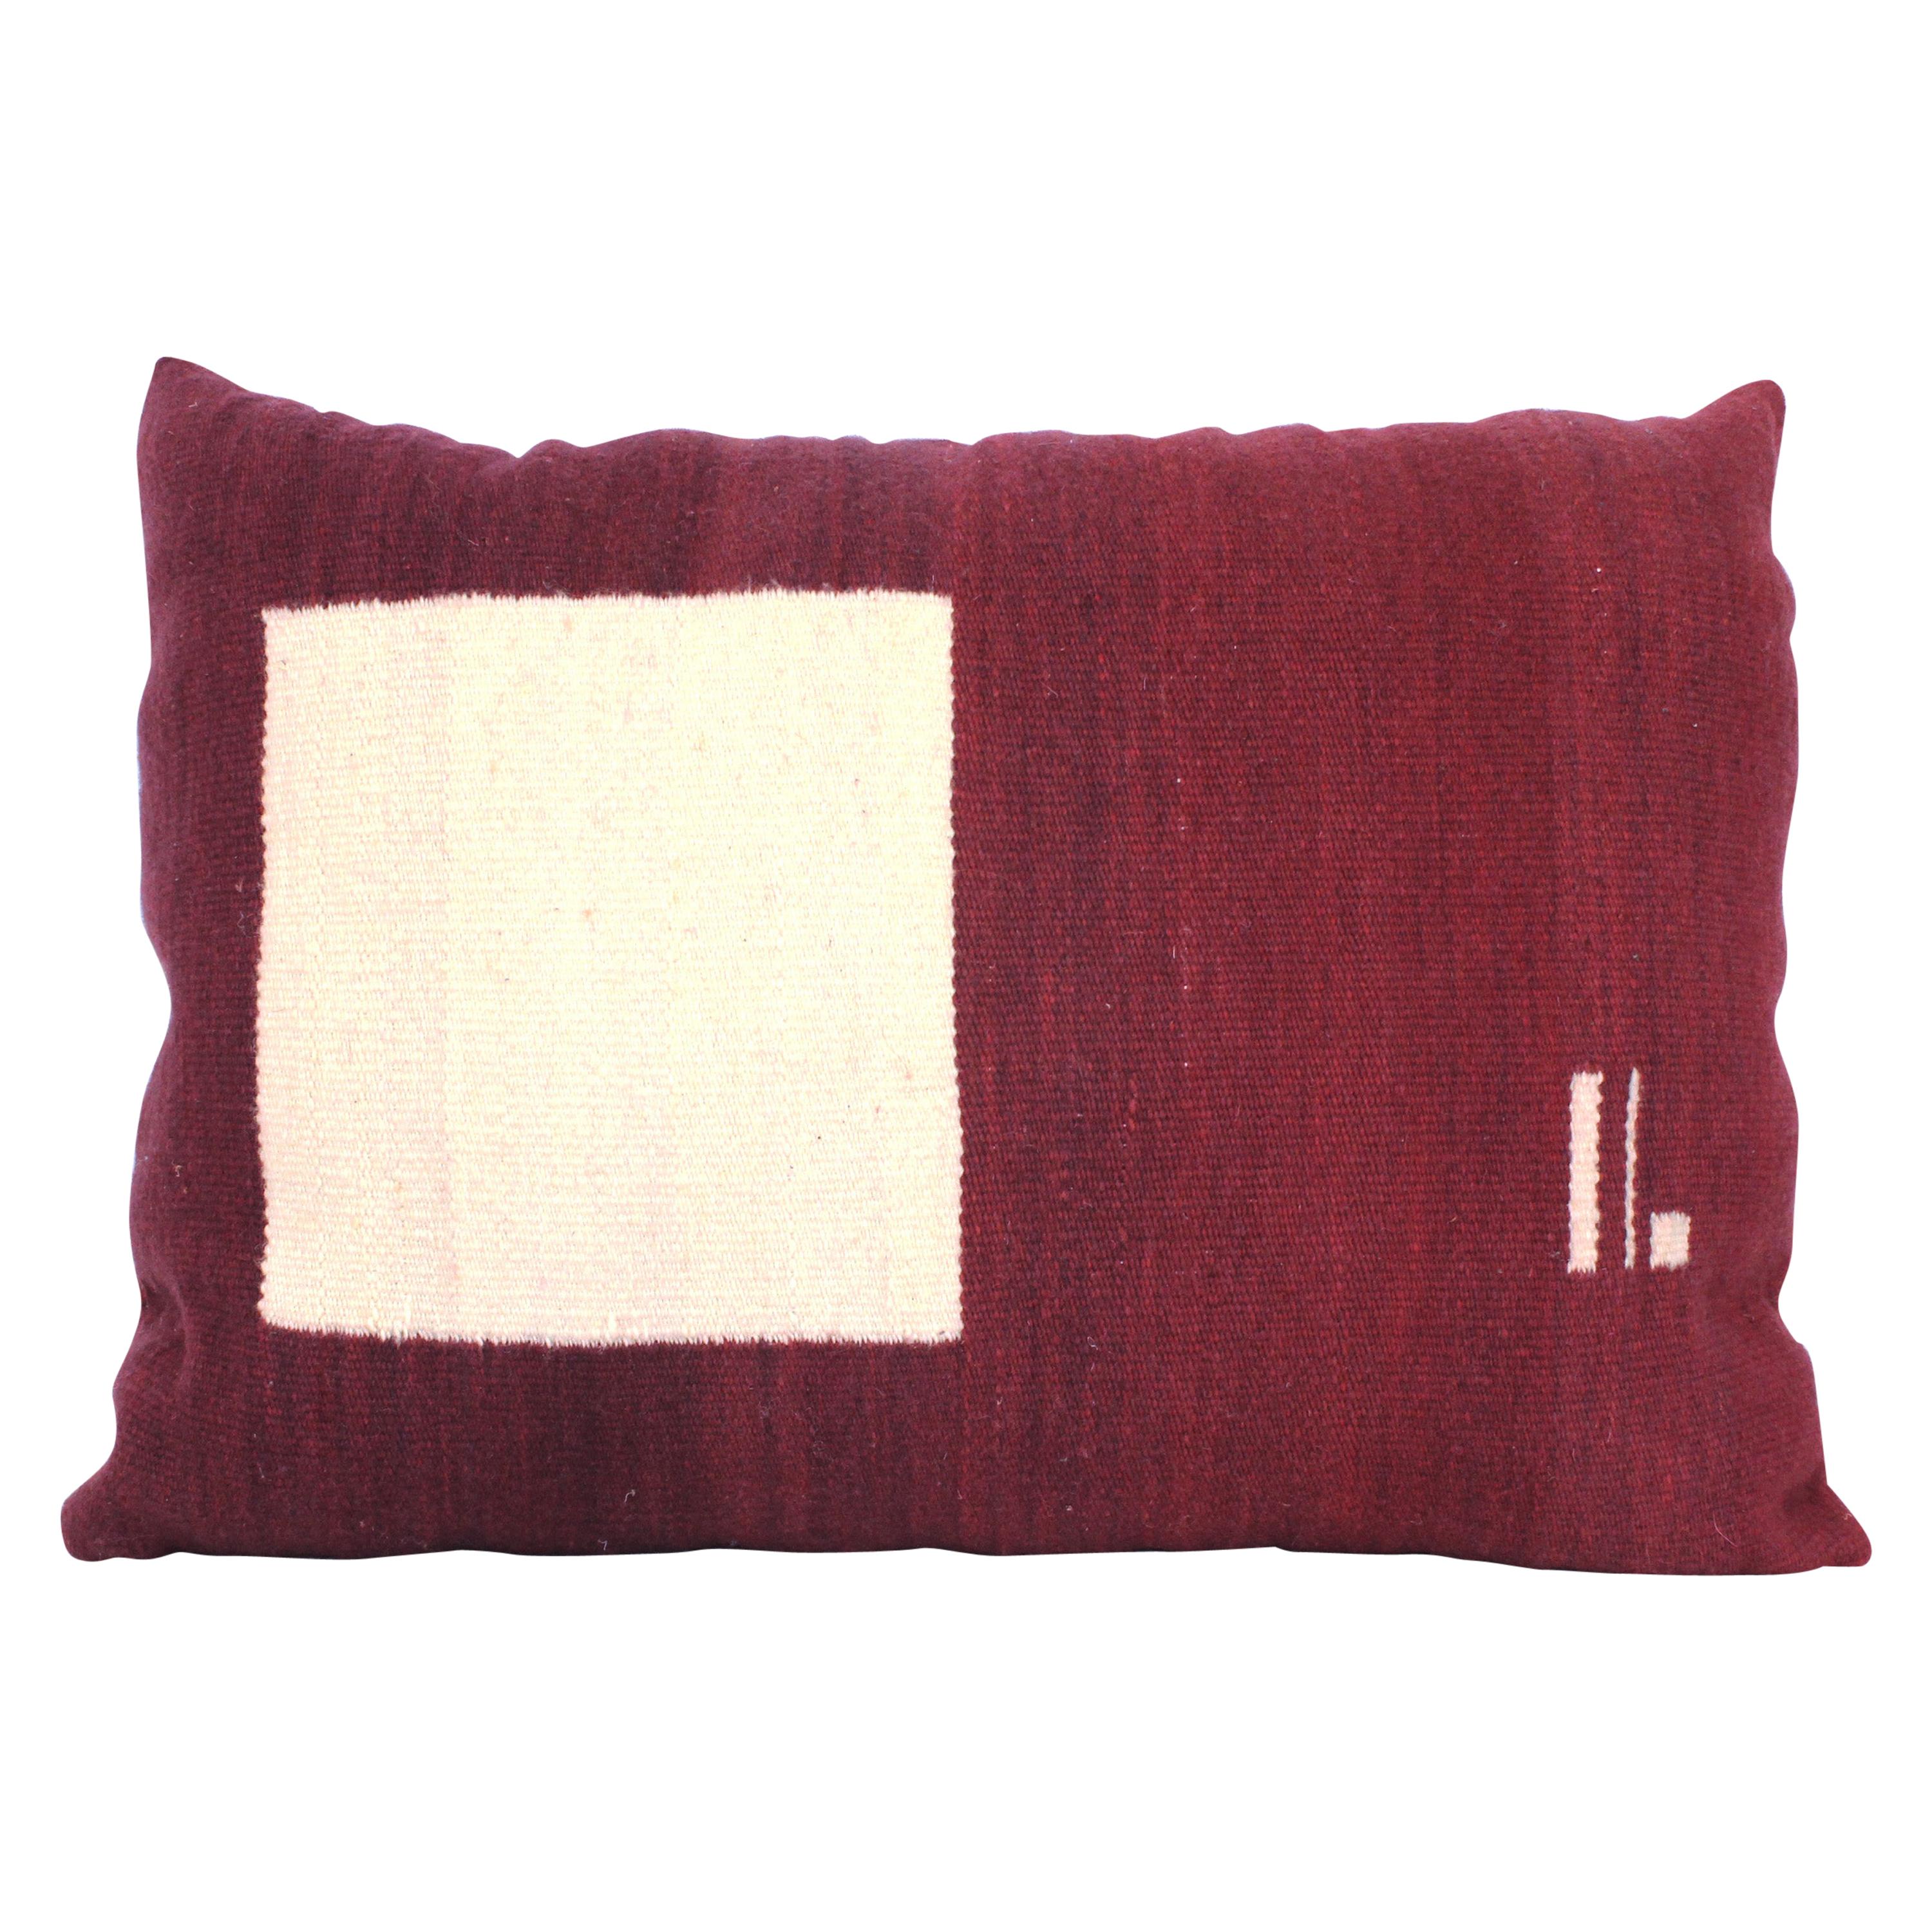 Bespoke Handwoven Wool Throw Pillow, Natural Dye, Maroon and Cream